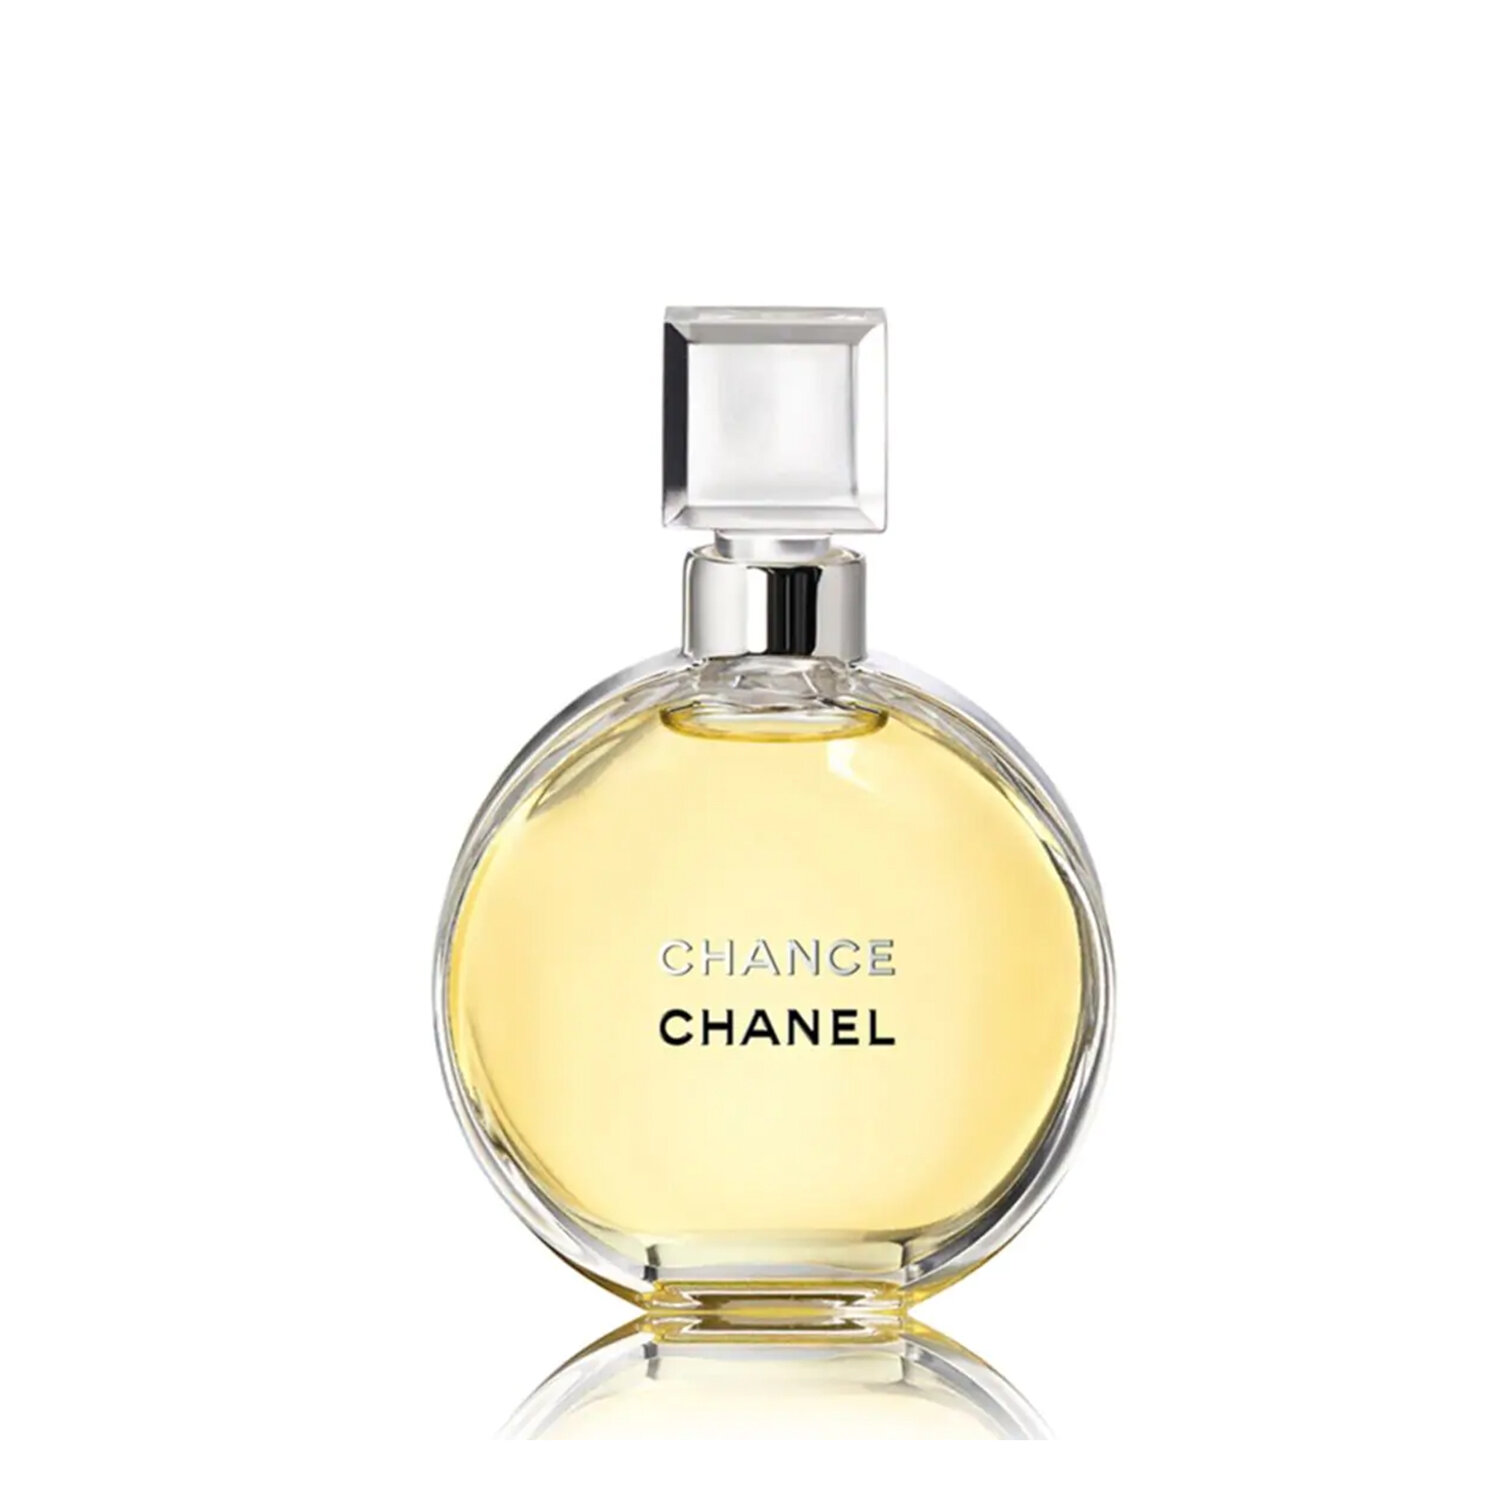 CHANEL CHANCE Parfum Bottle